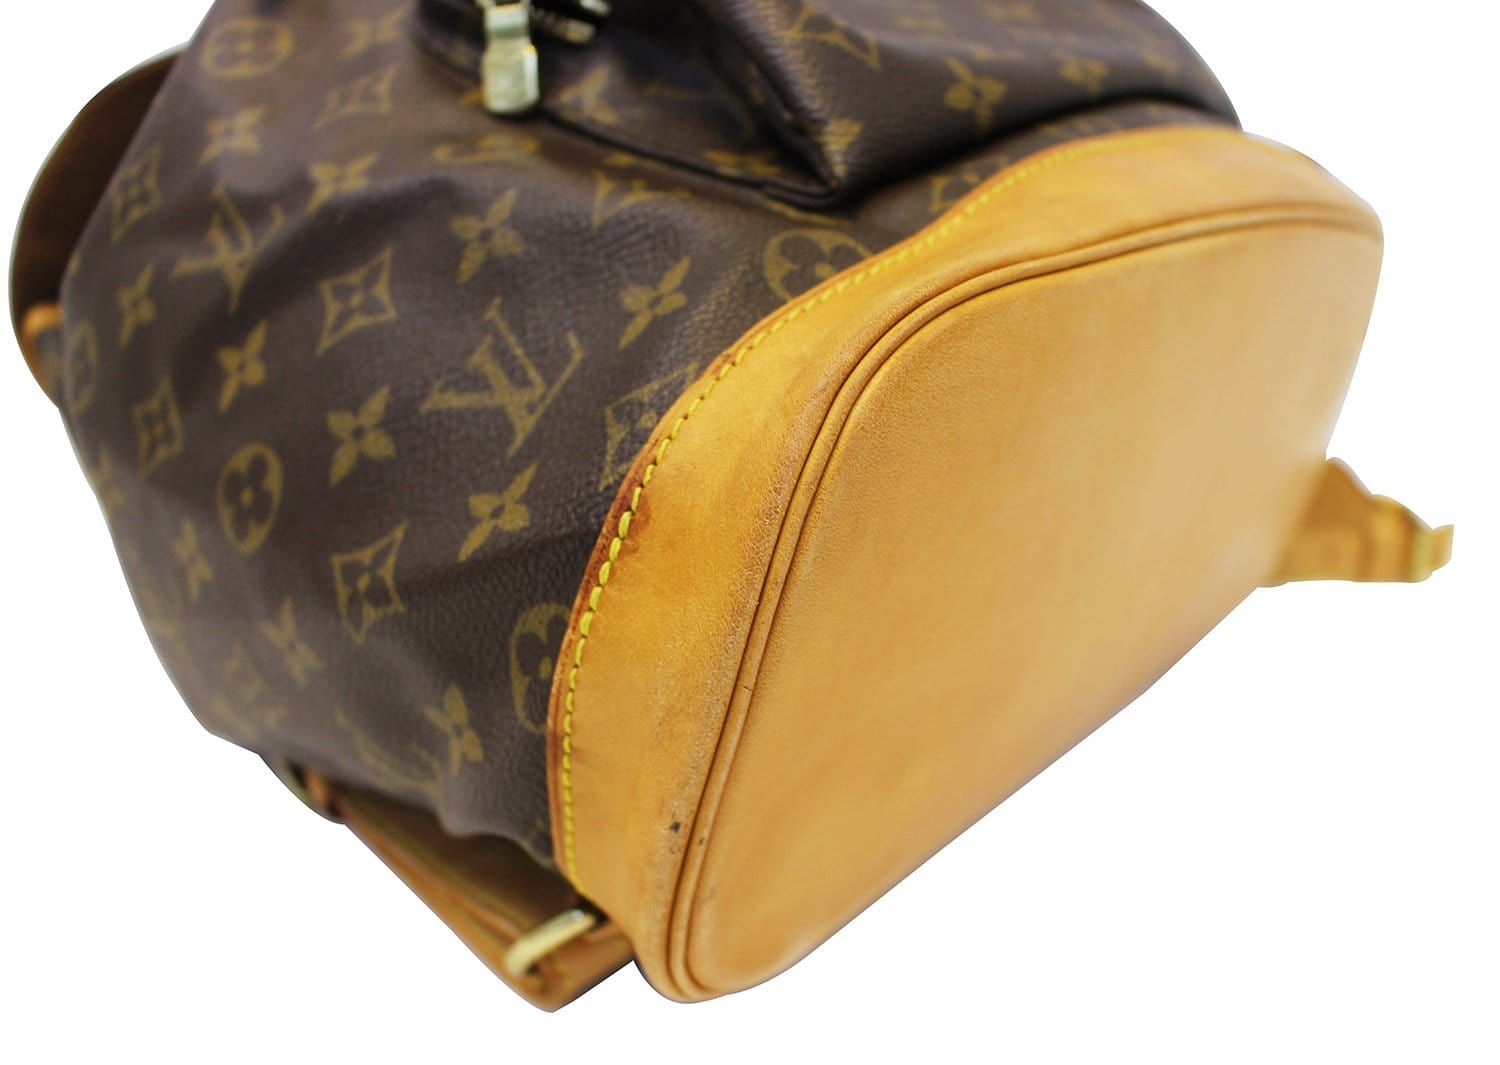 Women's Louis Vuitton Backpacks from £691